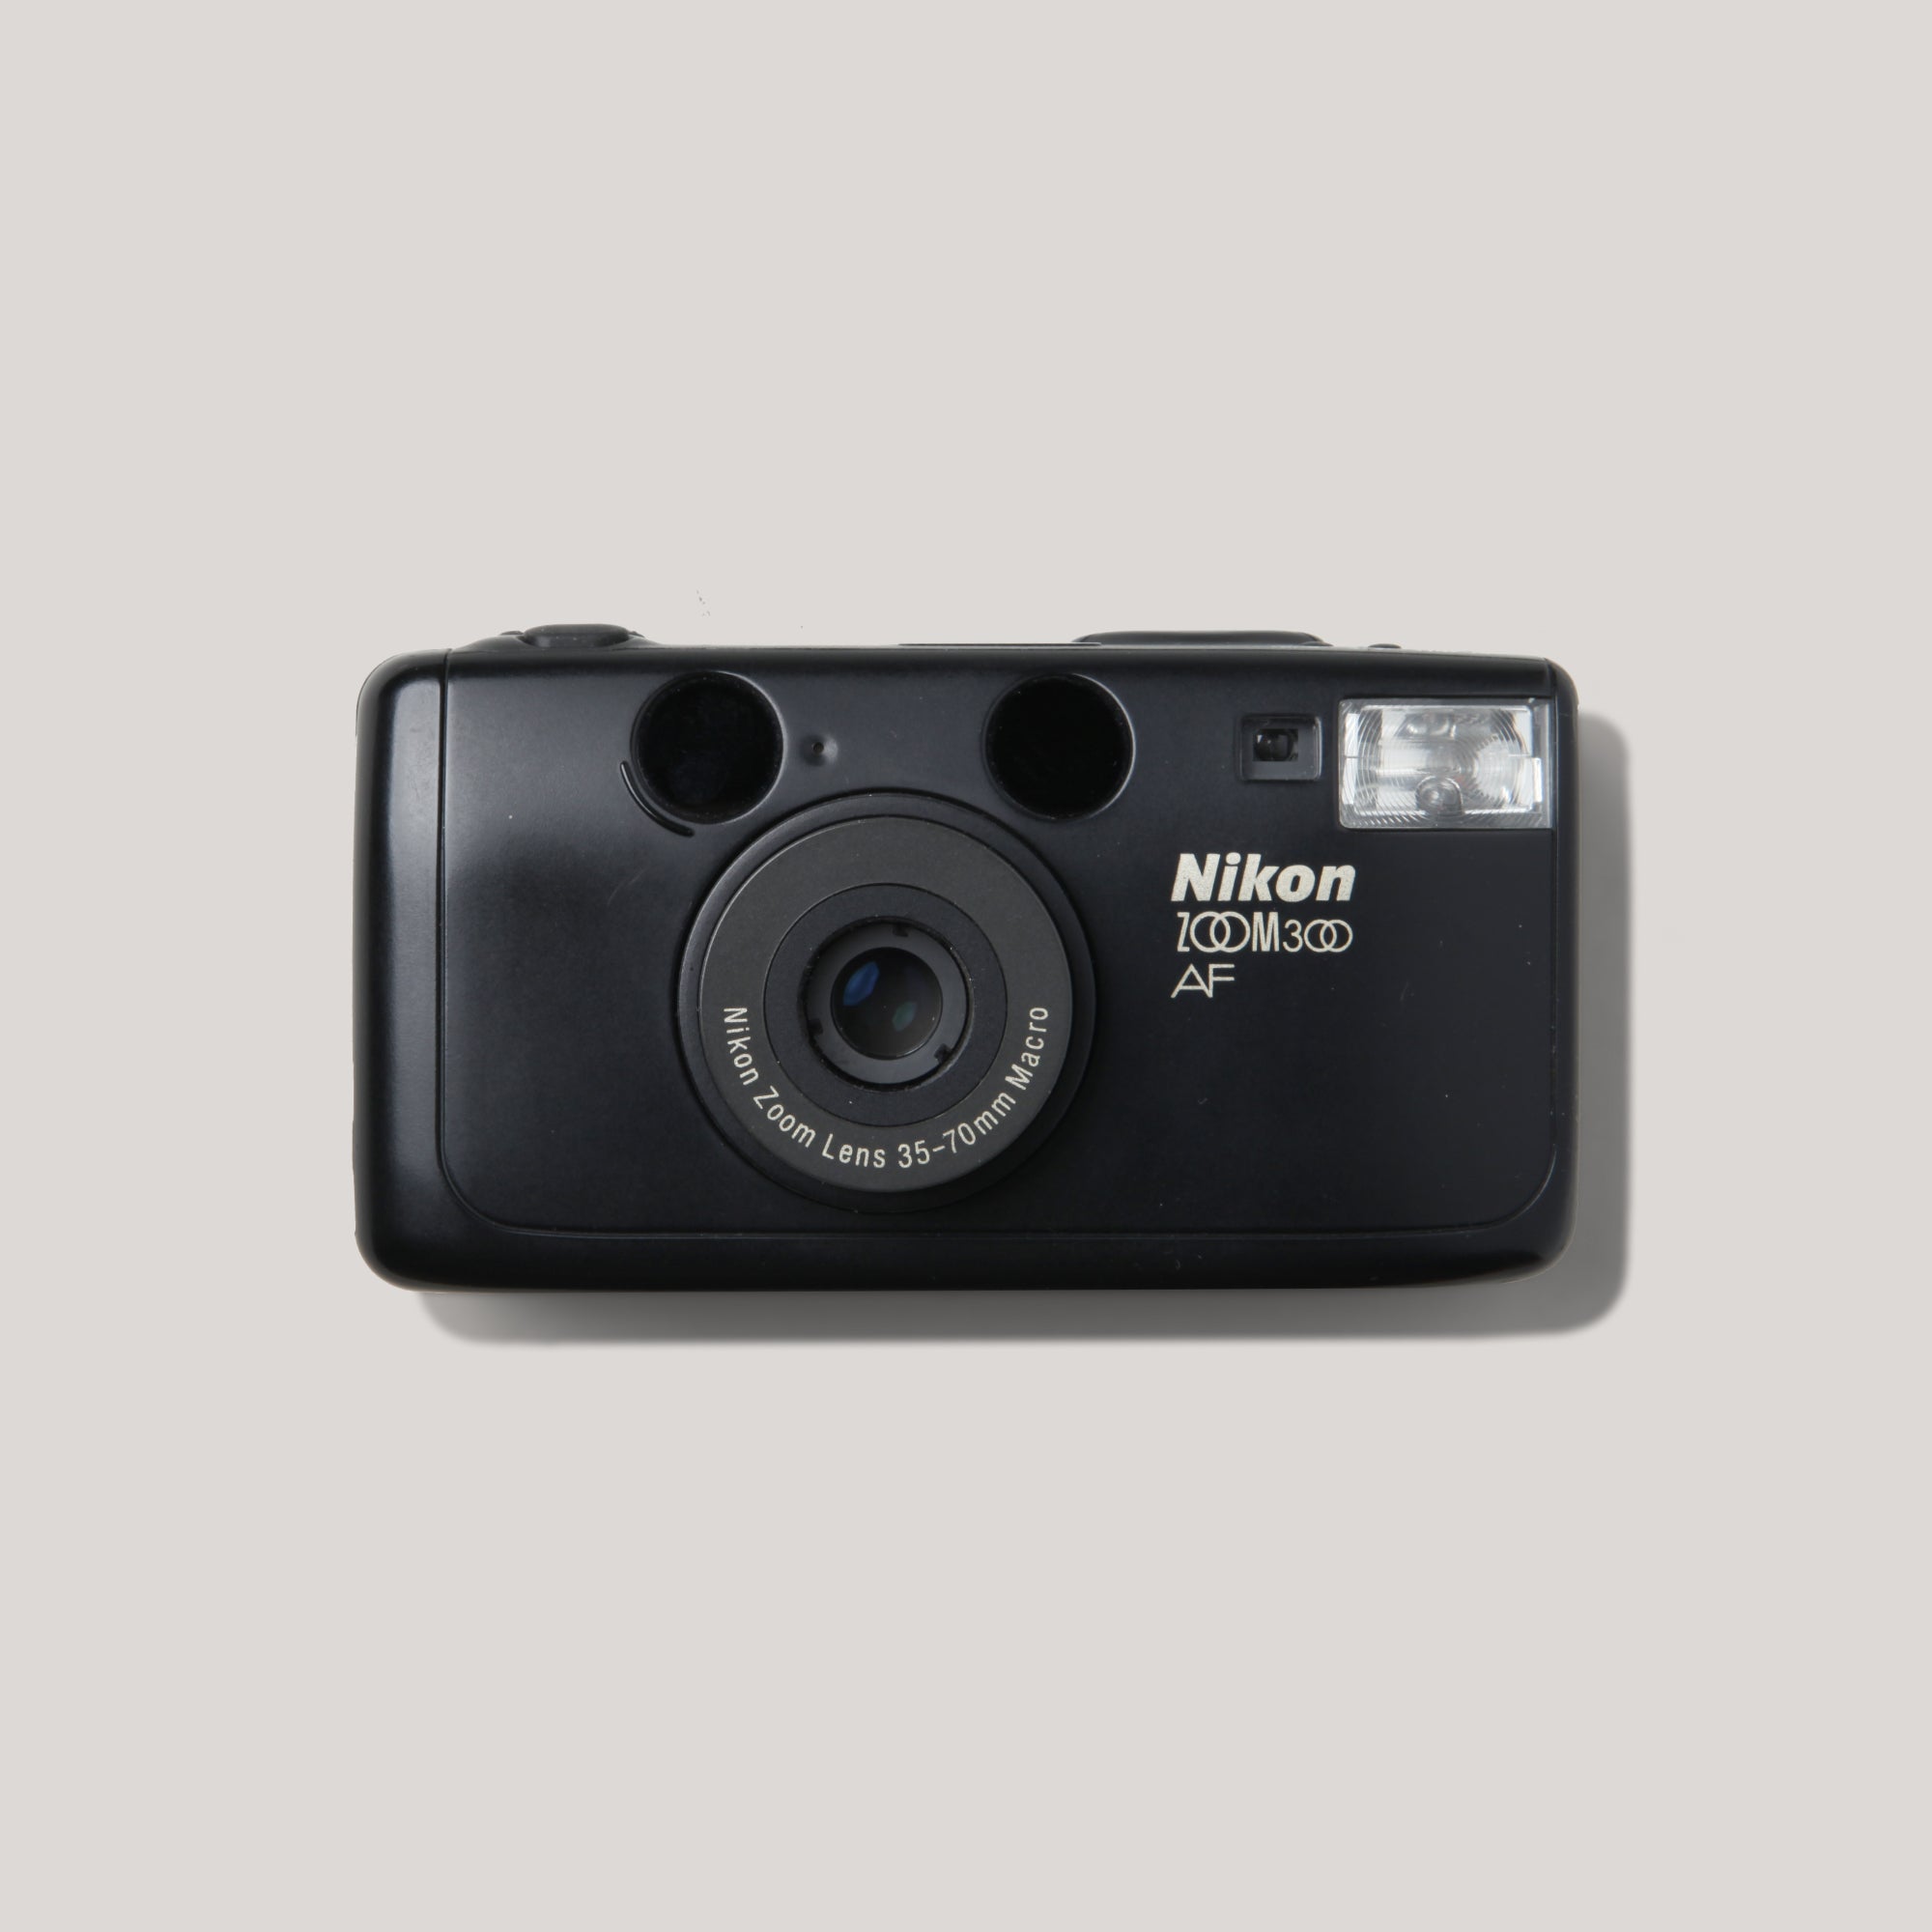 Buy Nikon Zoom 300 AF now at Analogue Amsterdam